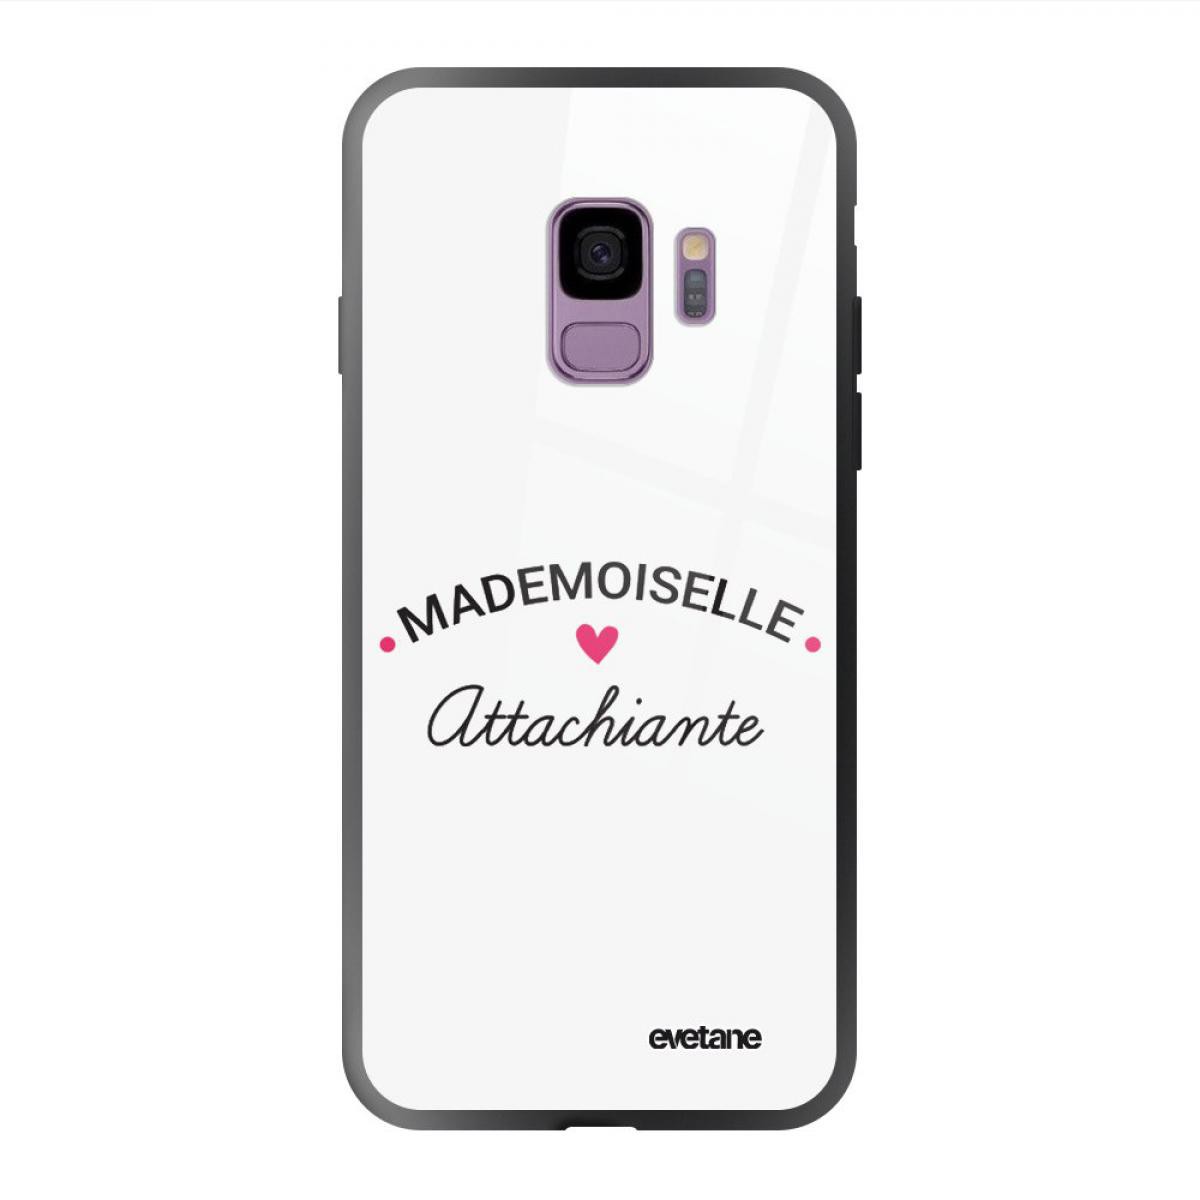 Evetane - Coque Galaxy S9 soft touch noir effet glossy Mademoiselle Attachiante Design Evetane - Coque, étui smartphone